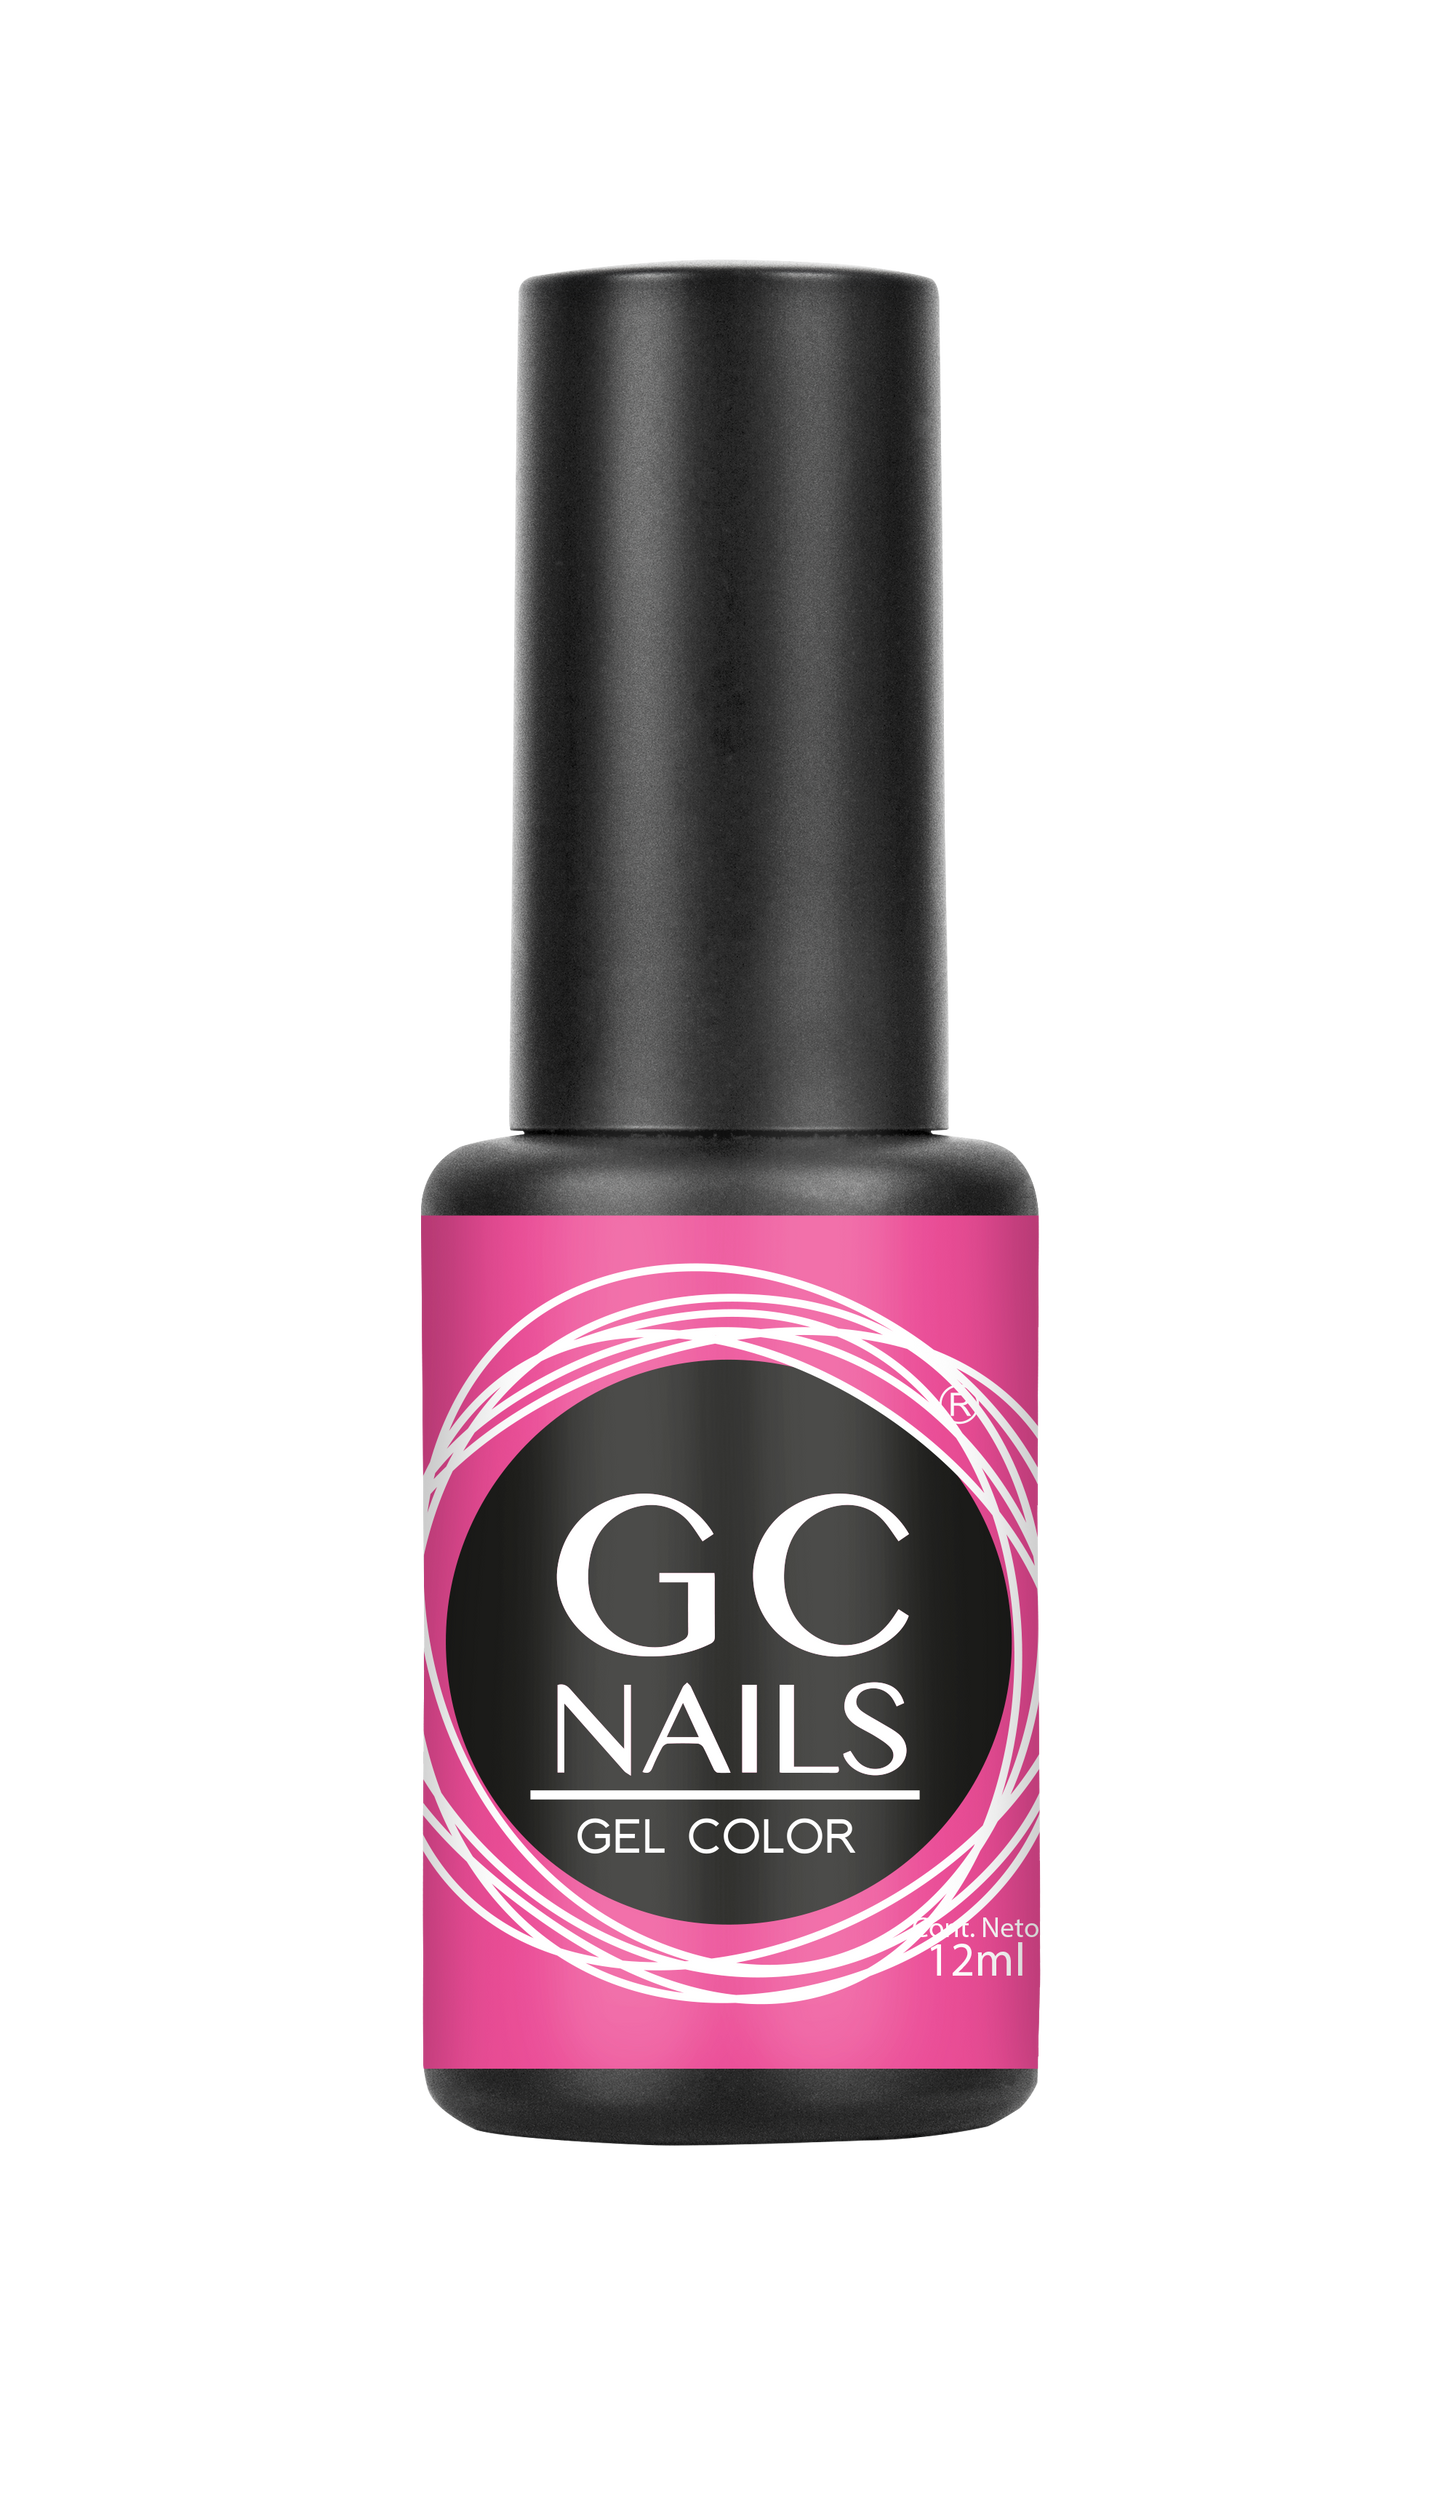 GC nails bel-color 12ml JAMBO GLOW 83